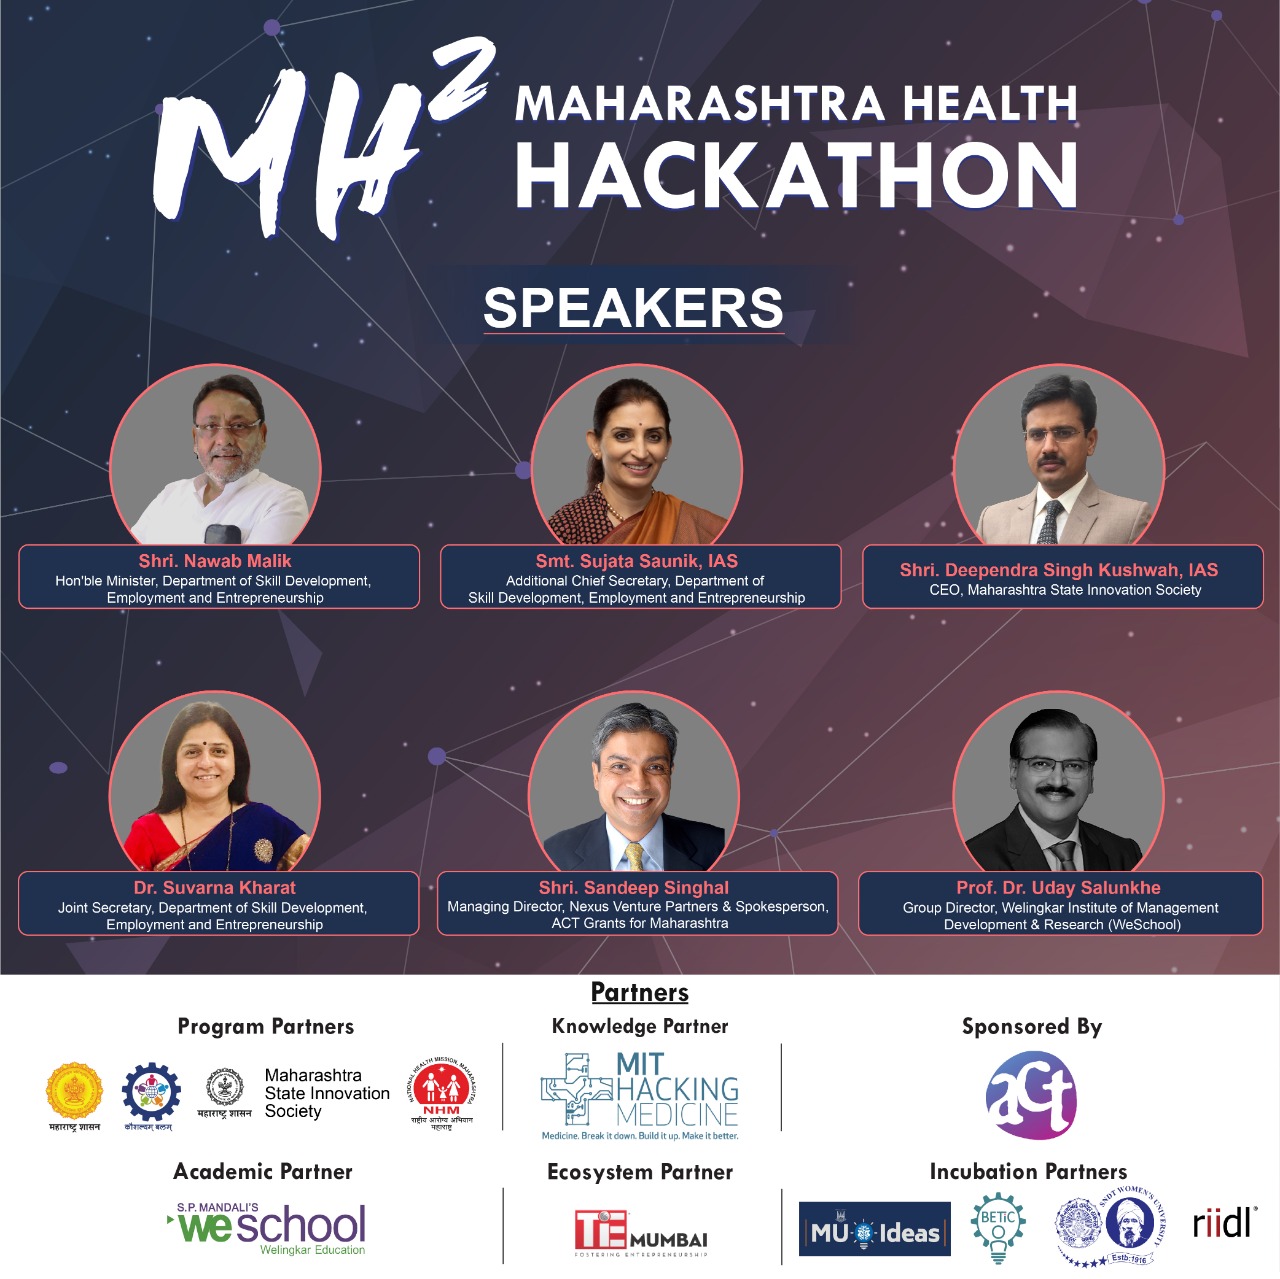 WeSchool collaborates for Maharashtra Health Hackathon - MH²  as Academic Partner